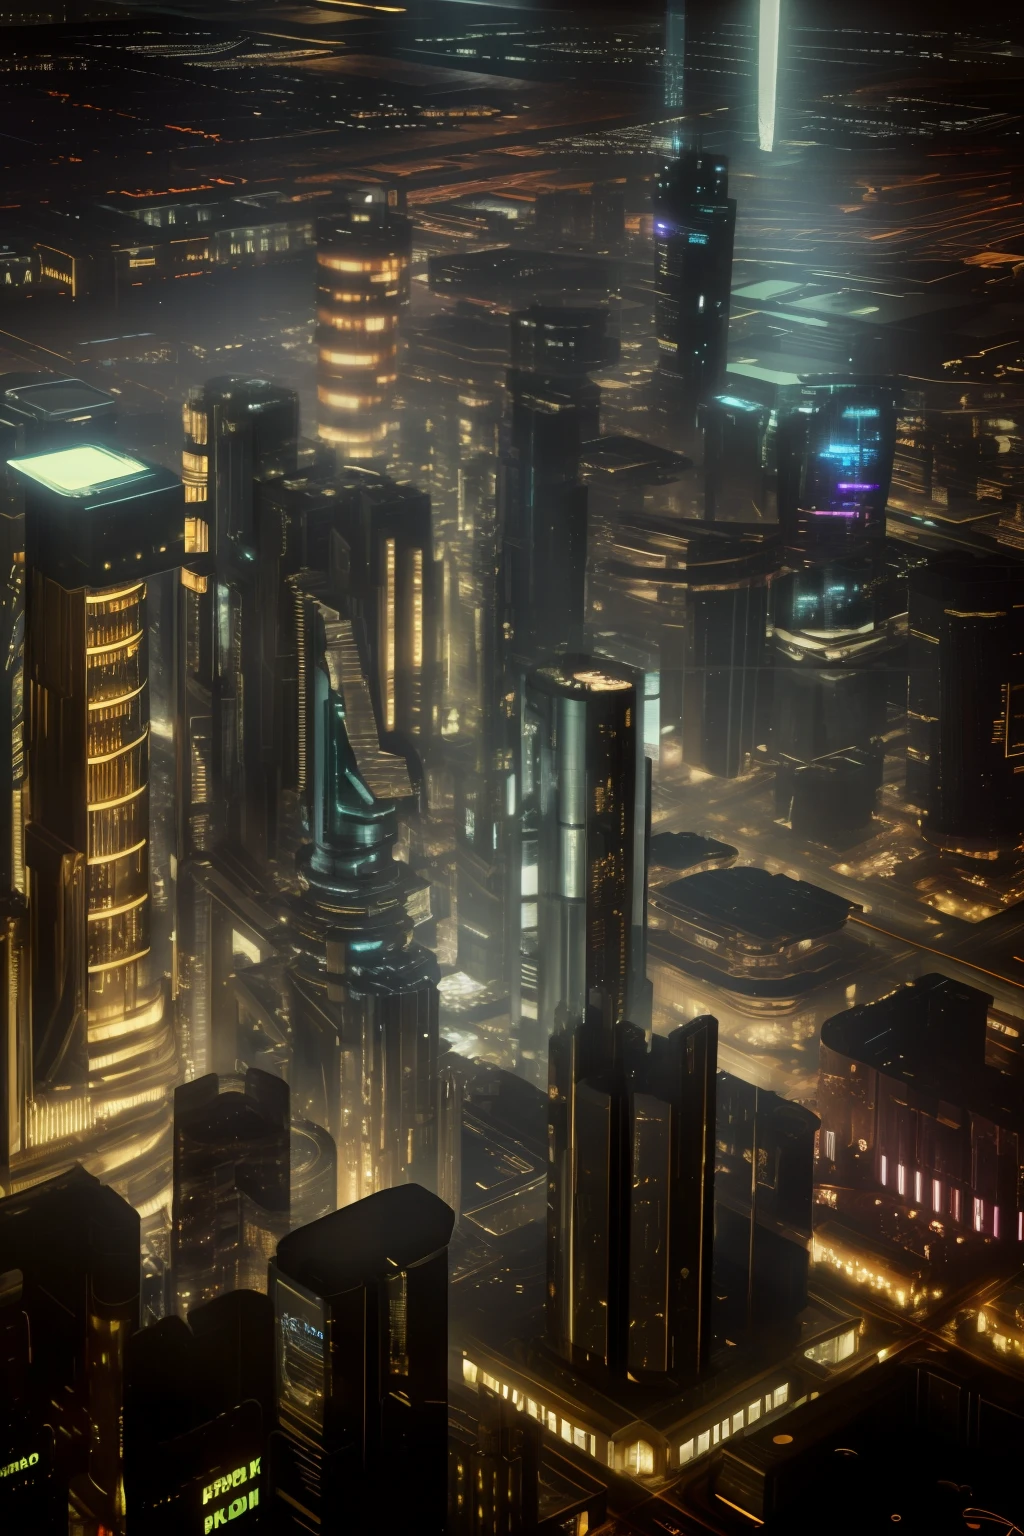 Alta resolución, obra maestra, alta calidad, rico detalle, fondo de pantalla 8k, ciudad ciberpunk, estilo steampunk, noche con muchos edificios dispersos, tiro frontal, tiro de abajo hacia arriba.